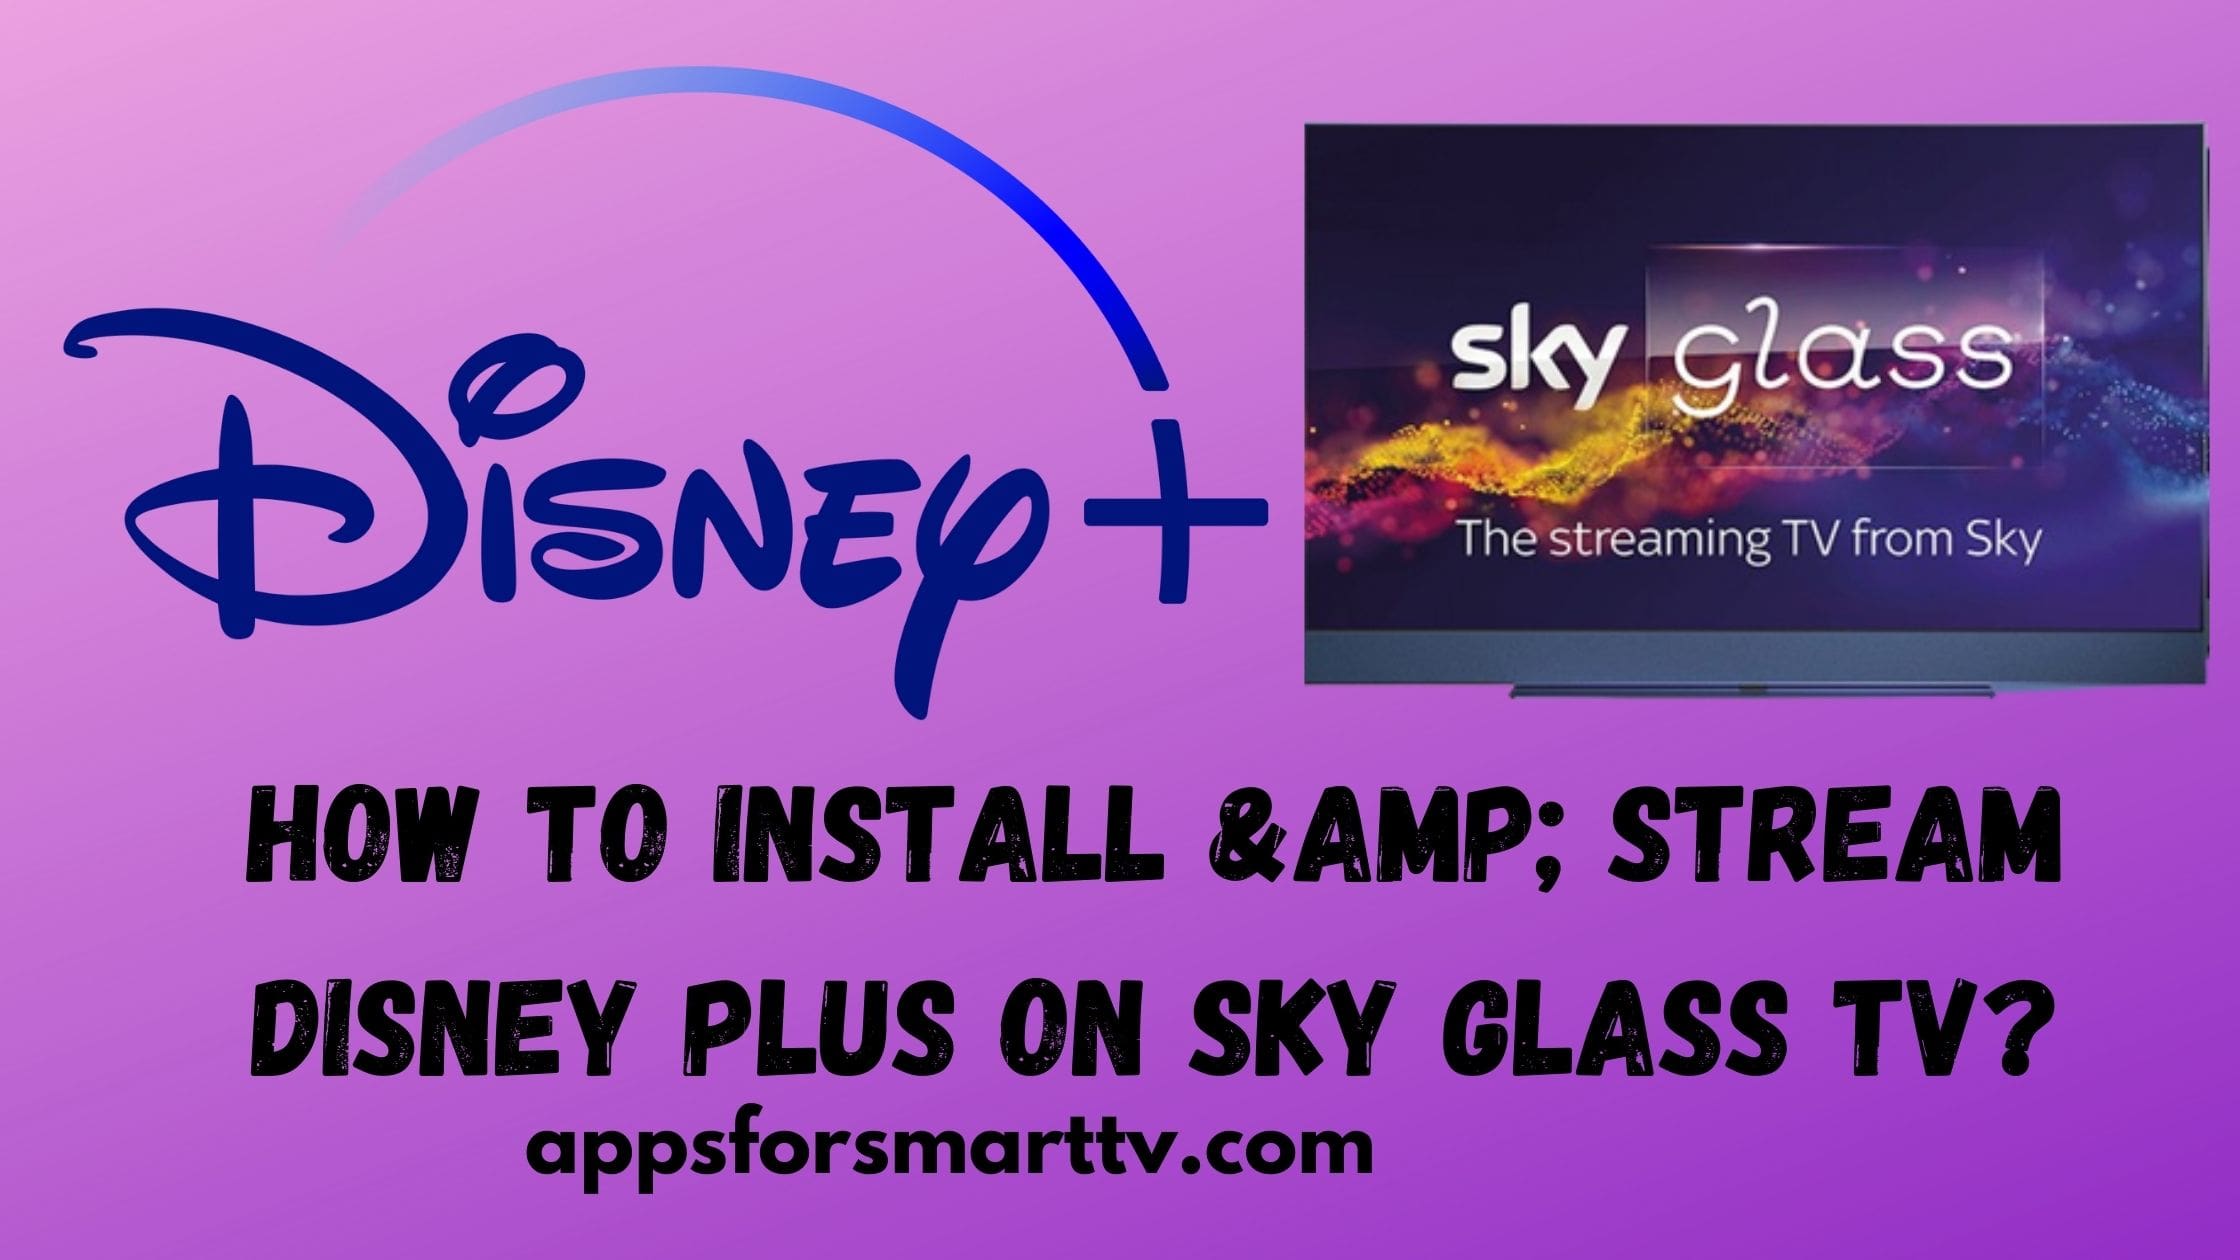 How to Install & Stream Disney Plus on SKy Glass TV?